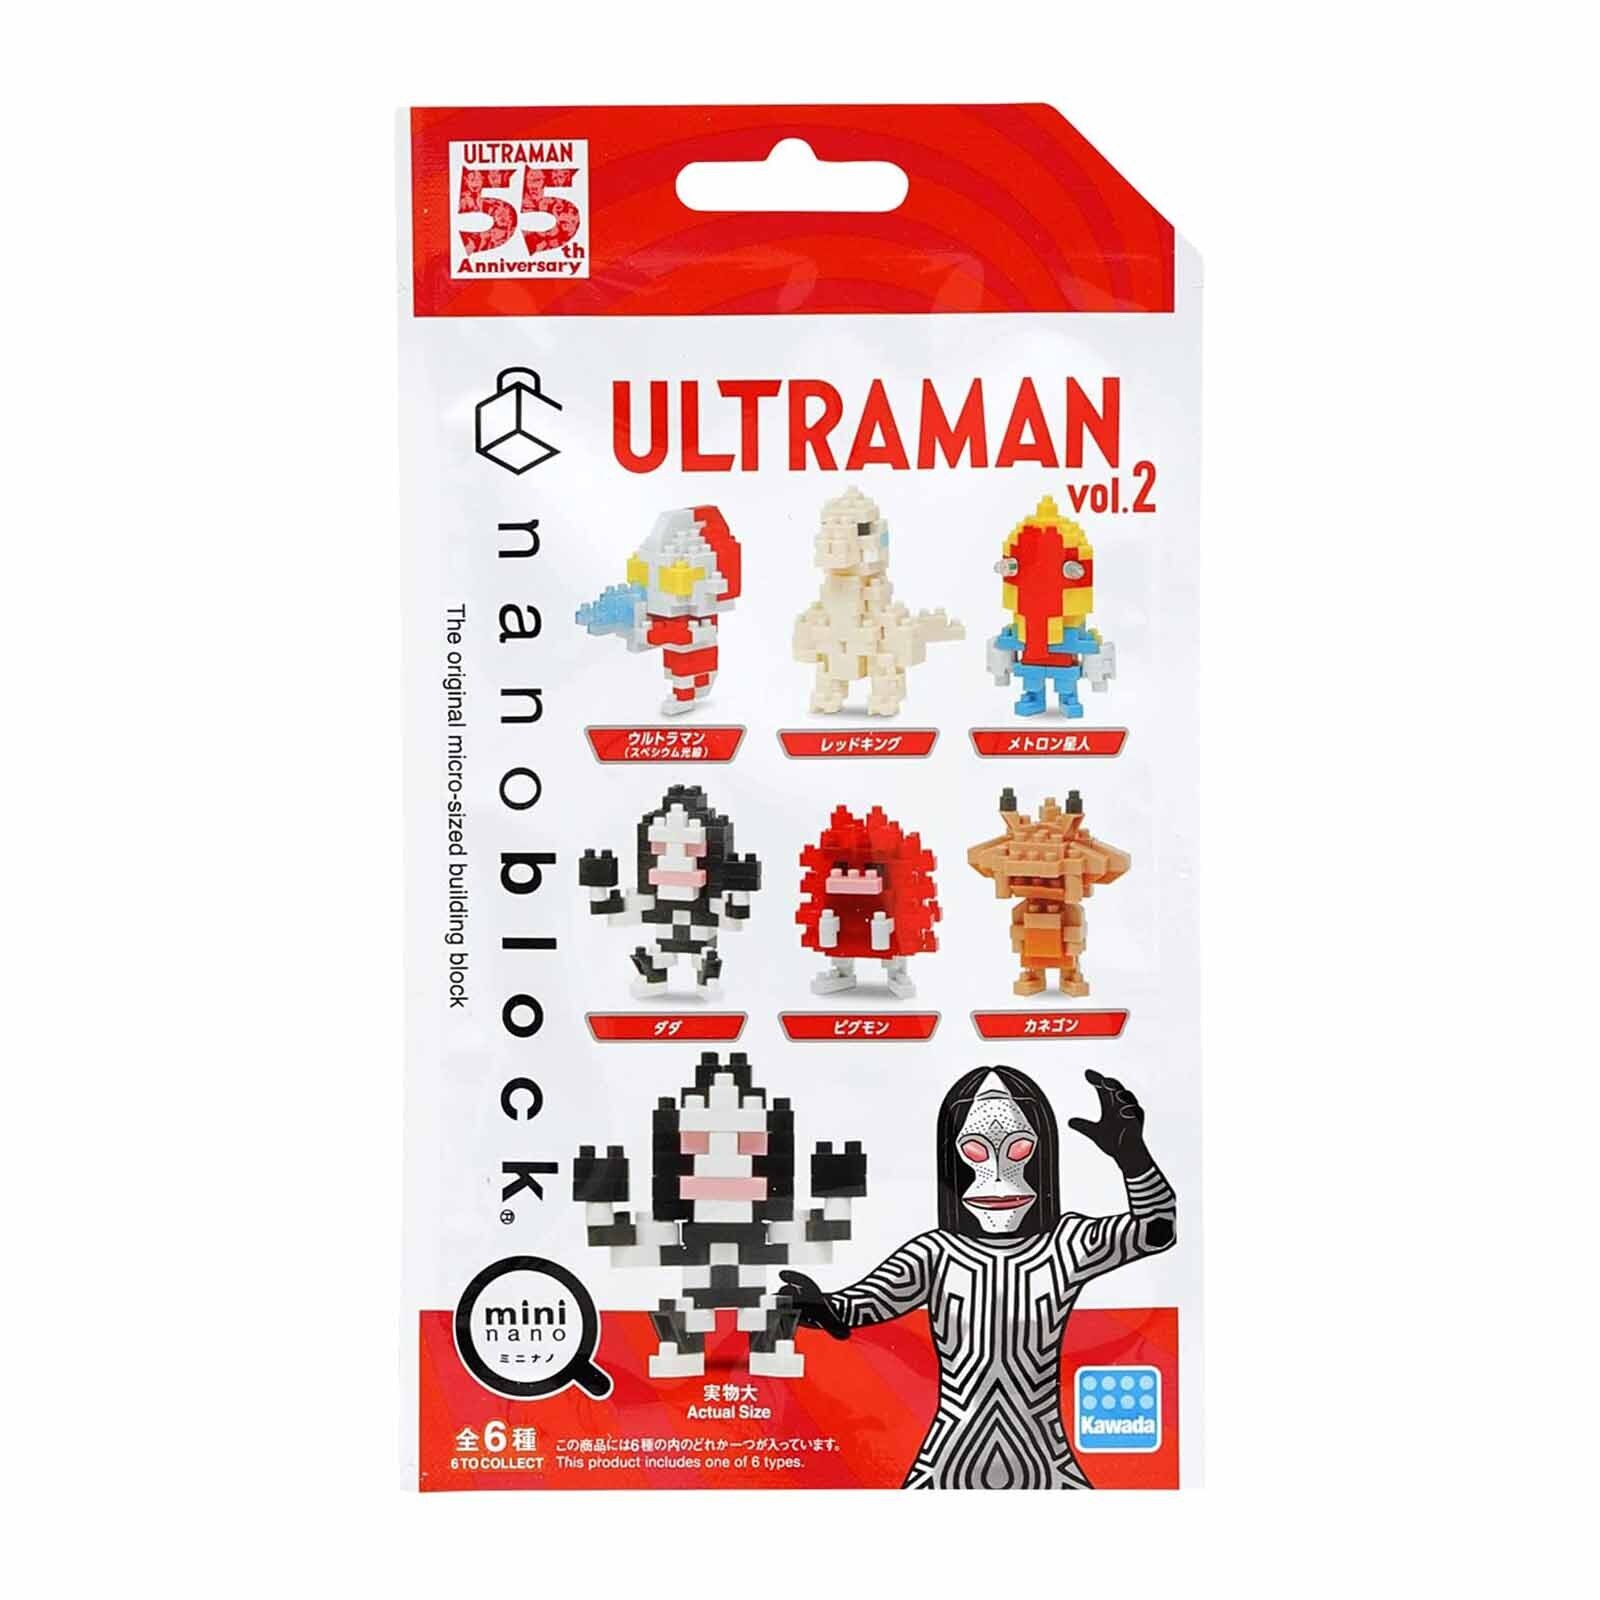 Nanoblock Ultraman Vol 2 Single Blind Bag Mininano Building Set NEW IN STOCK